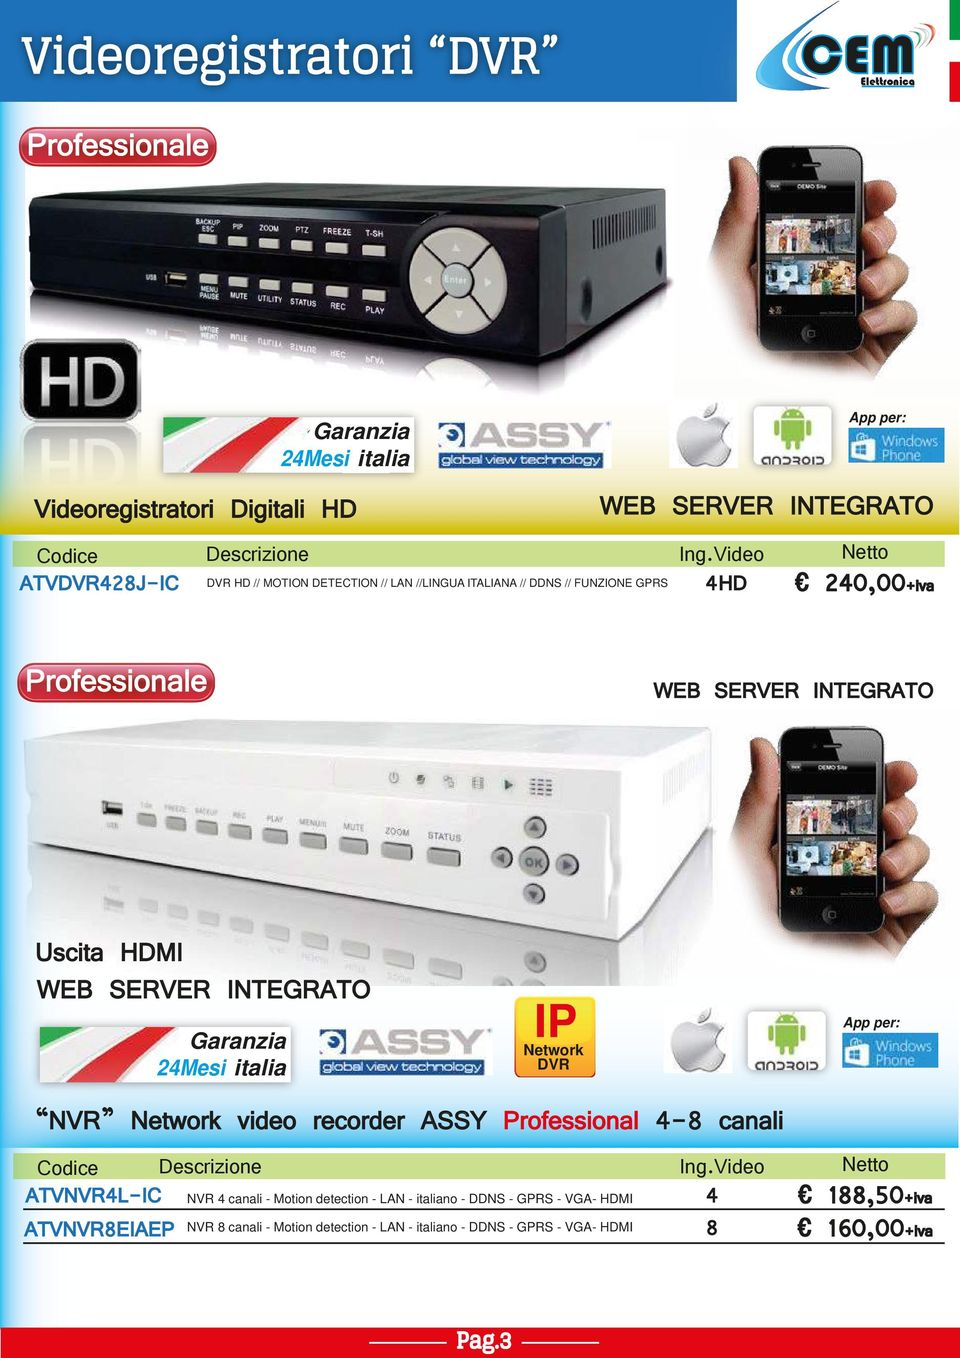 INTEGRATO Uscita HDMI WEB SERVER INTEGRATO IP Network DVR App per: NVR Network video recorder ASSY 4-8 canali Ing.